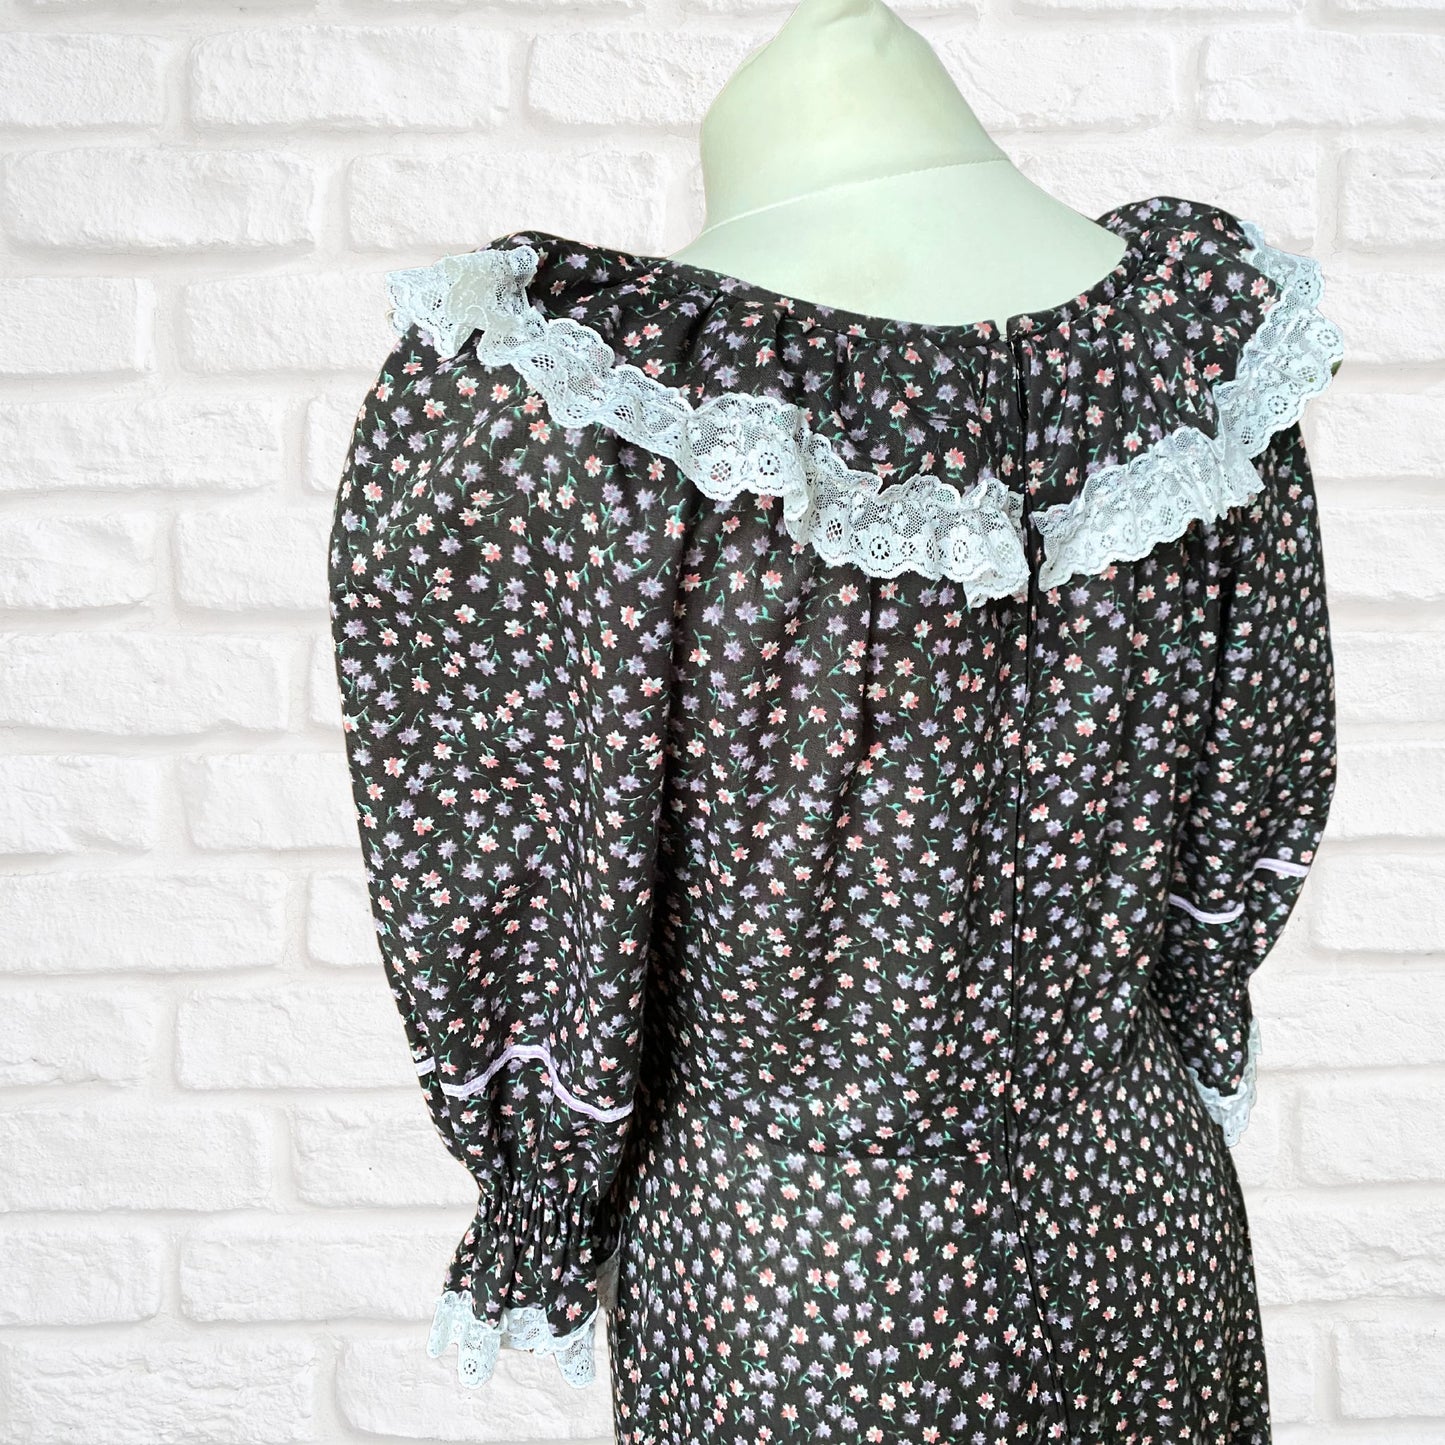 Vintage 70s Maxi Length Black Floral Prairie Dress with Lace Trim. Approx UK size 10-12